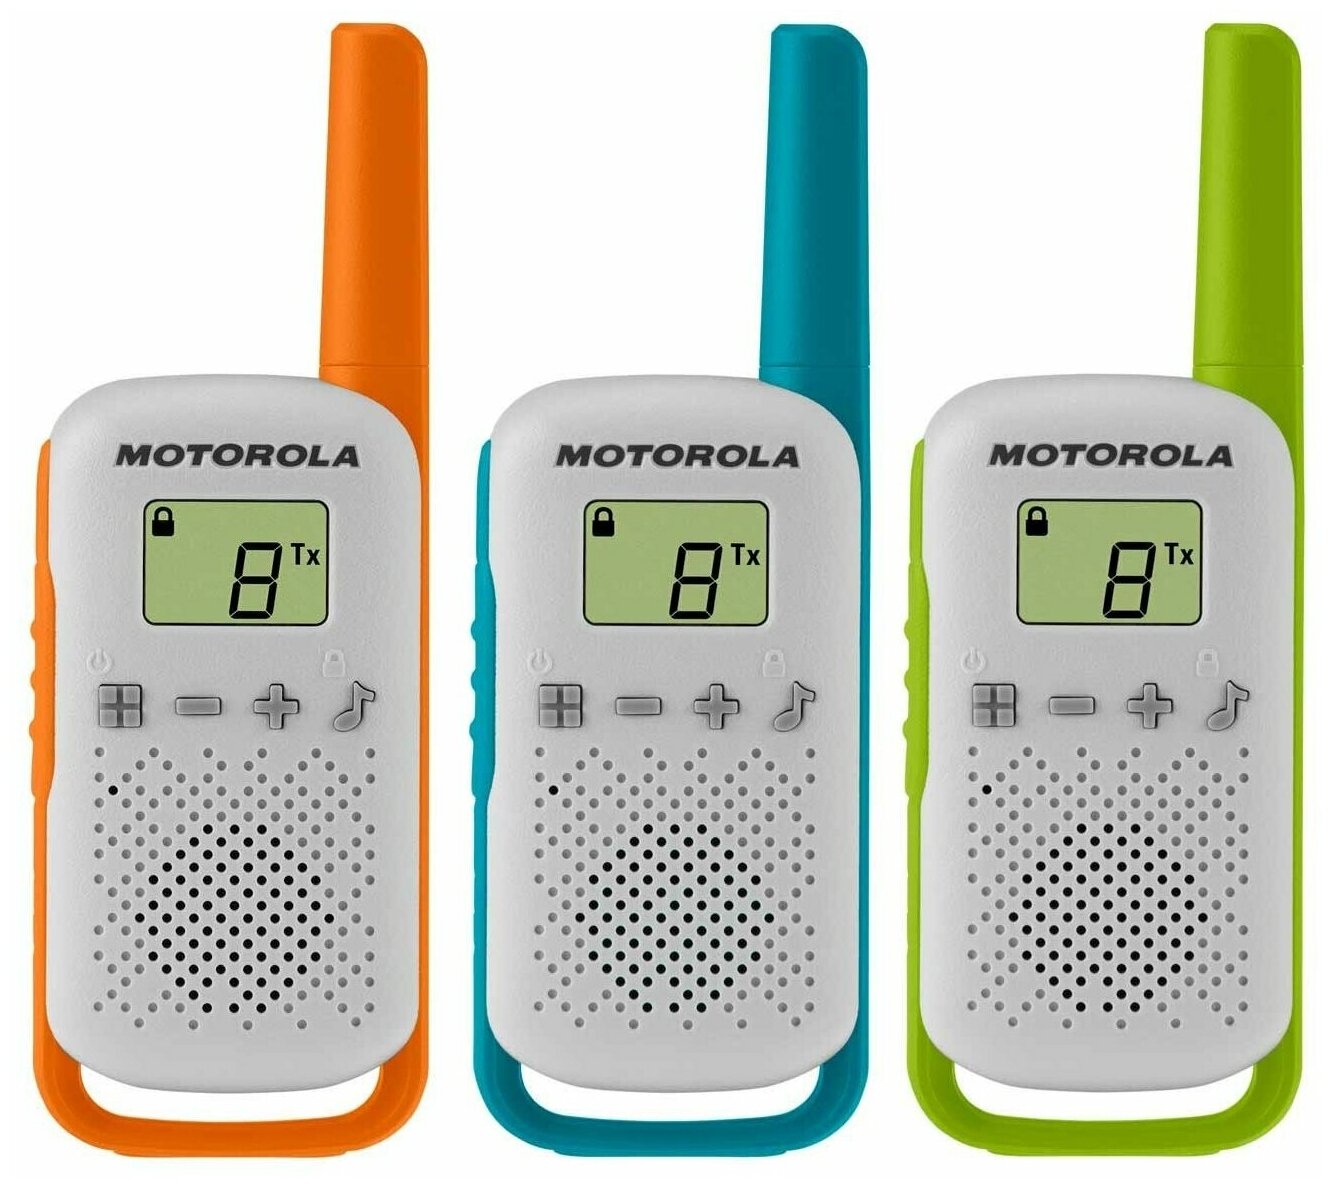   Motorola Solutions Motorola TLKR-T42 TRIPLE (Talkabout)